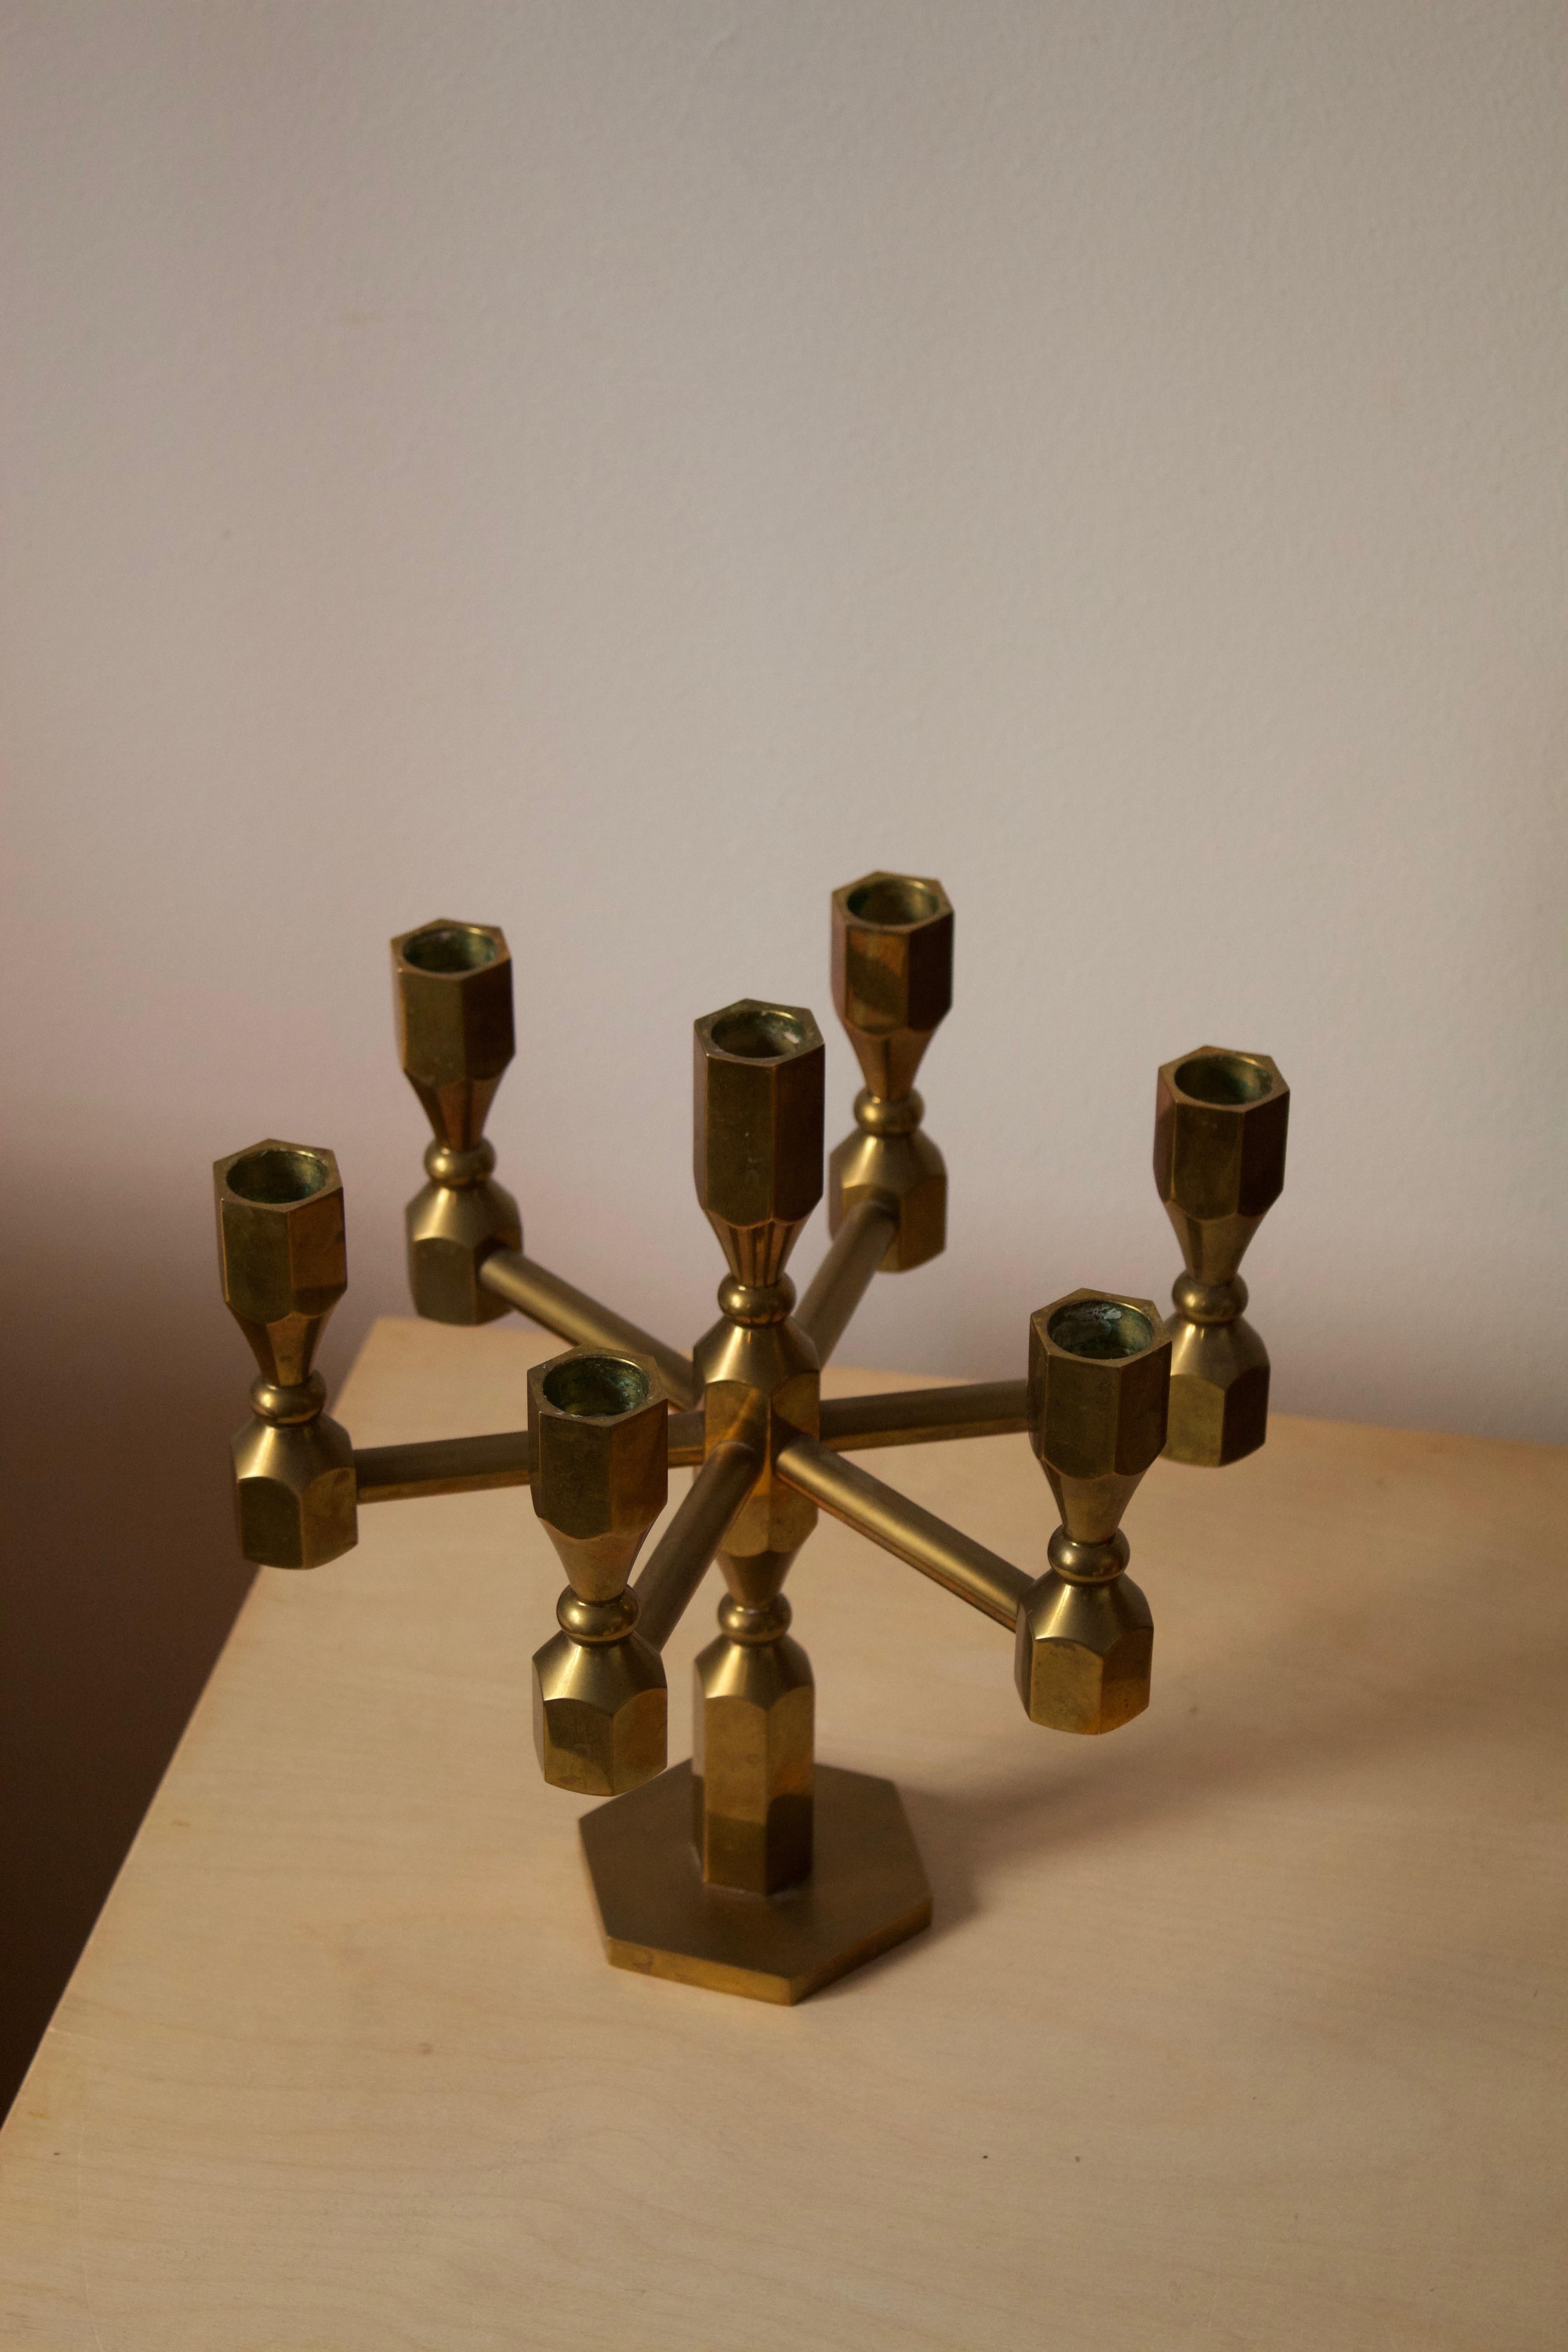 A candelabrum. Design and production by Metallslöjden Gusums Bruk, Sweden, 1984. In heavy alloy brass.